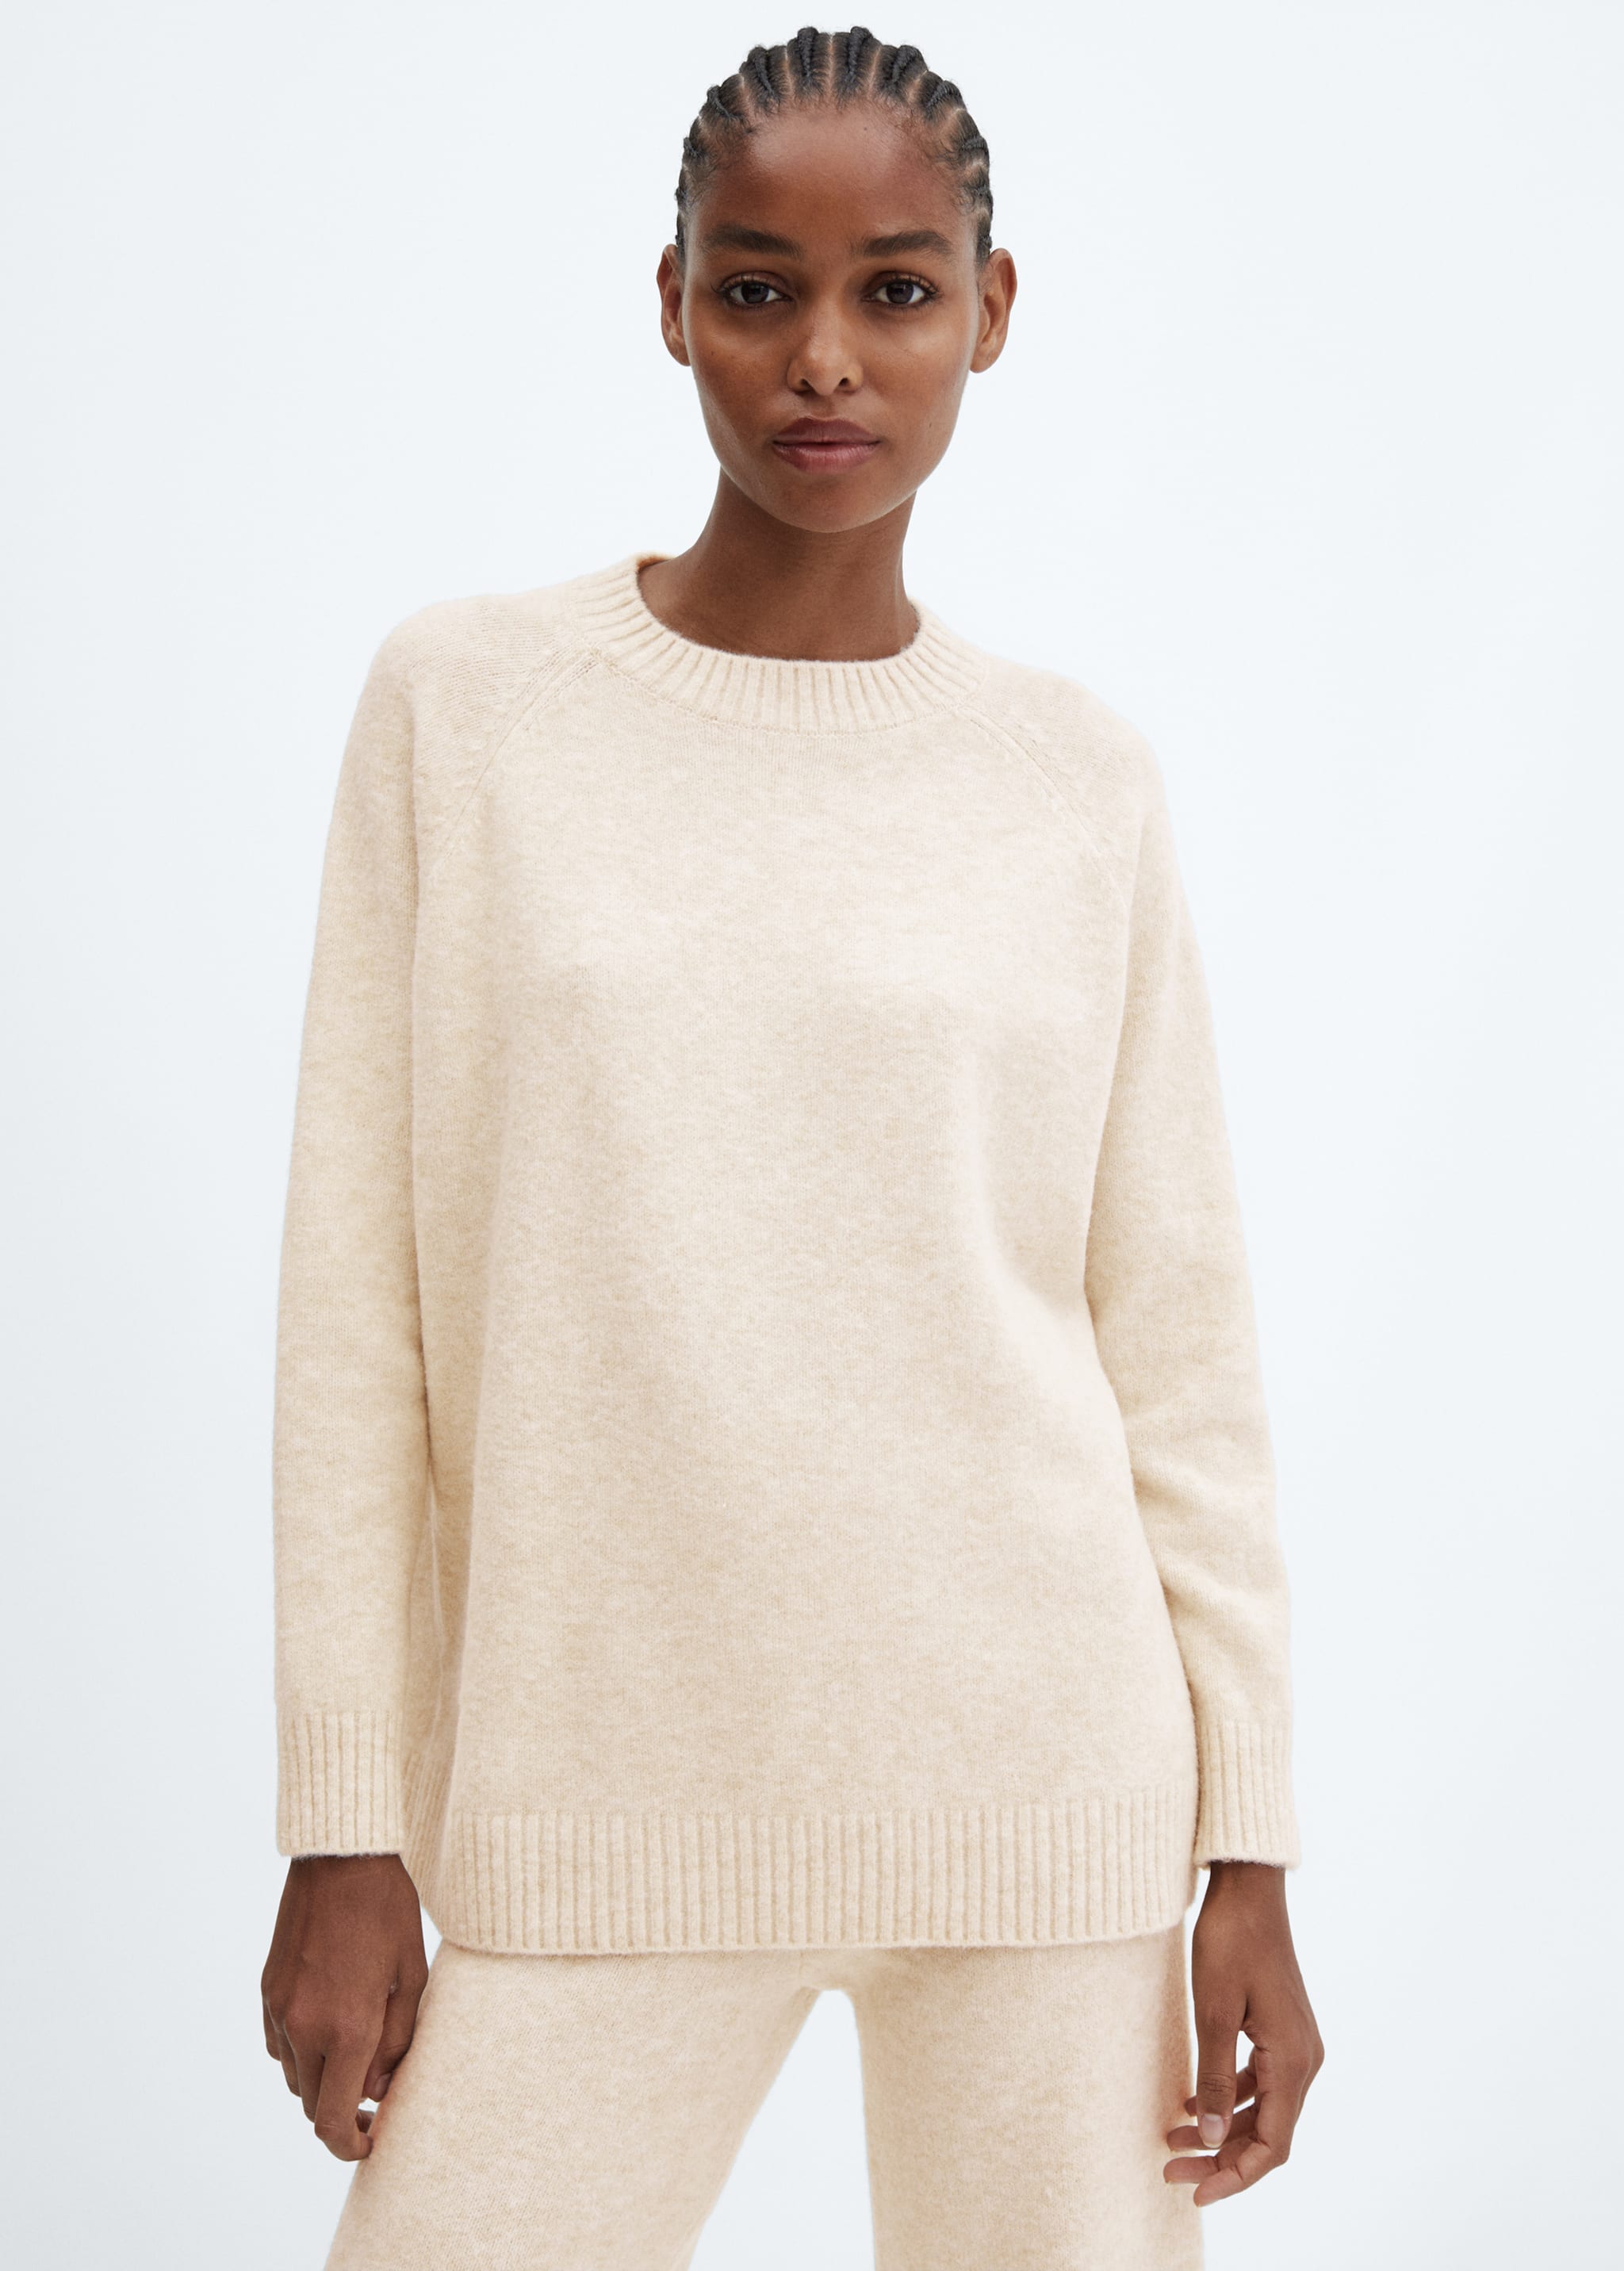 Oversize knit sweater - Medium plane